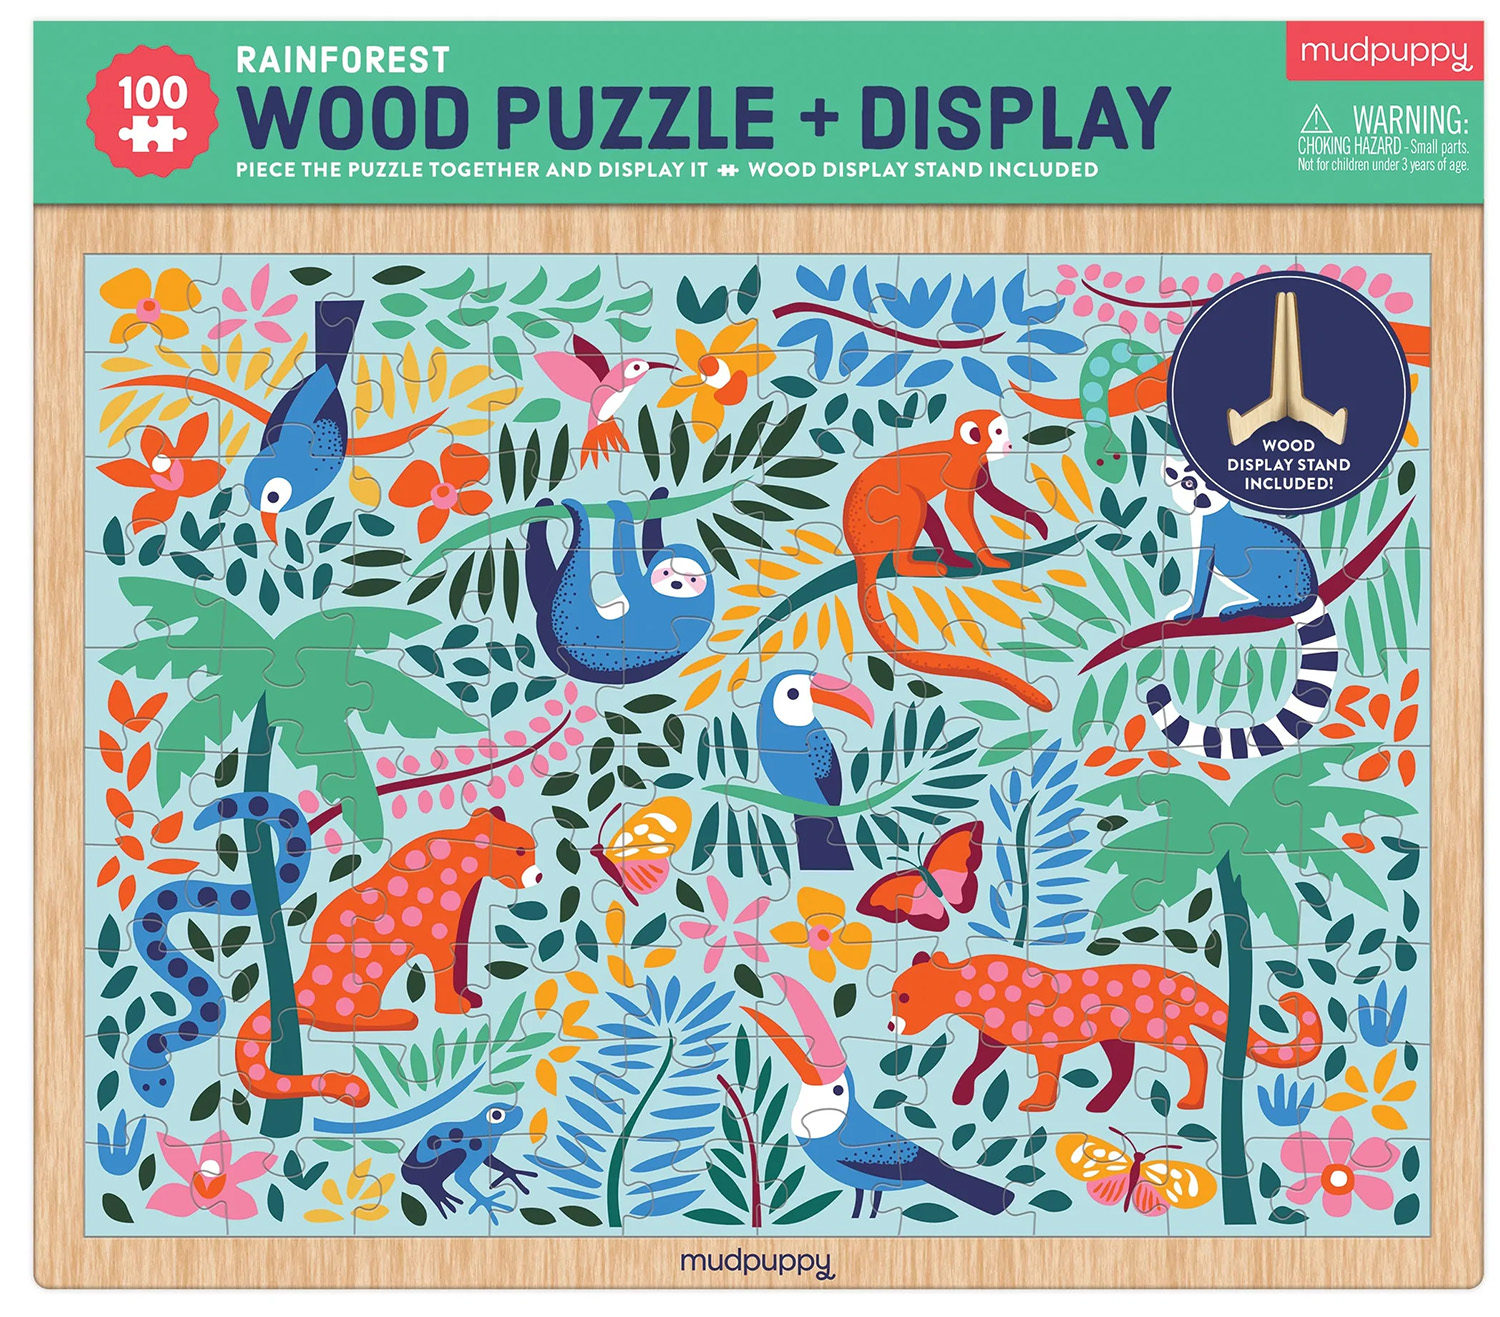 Rainforest Wooden Puzzle & Display